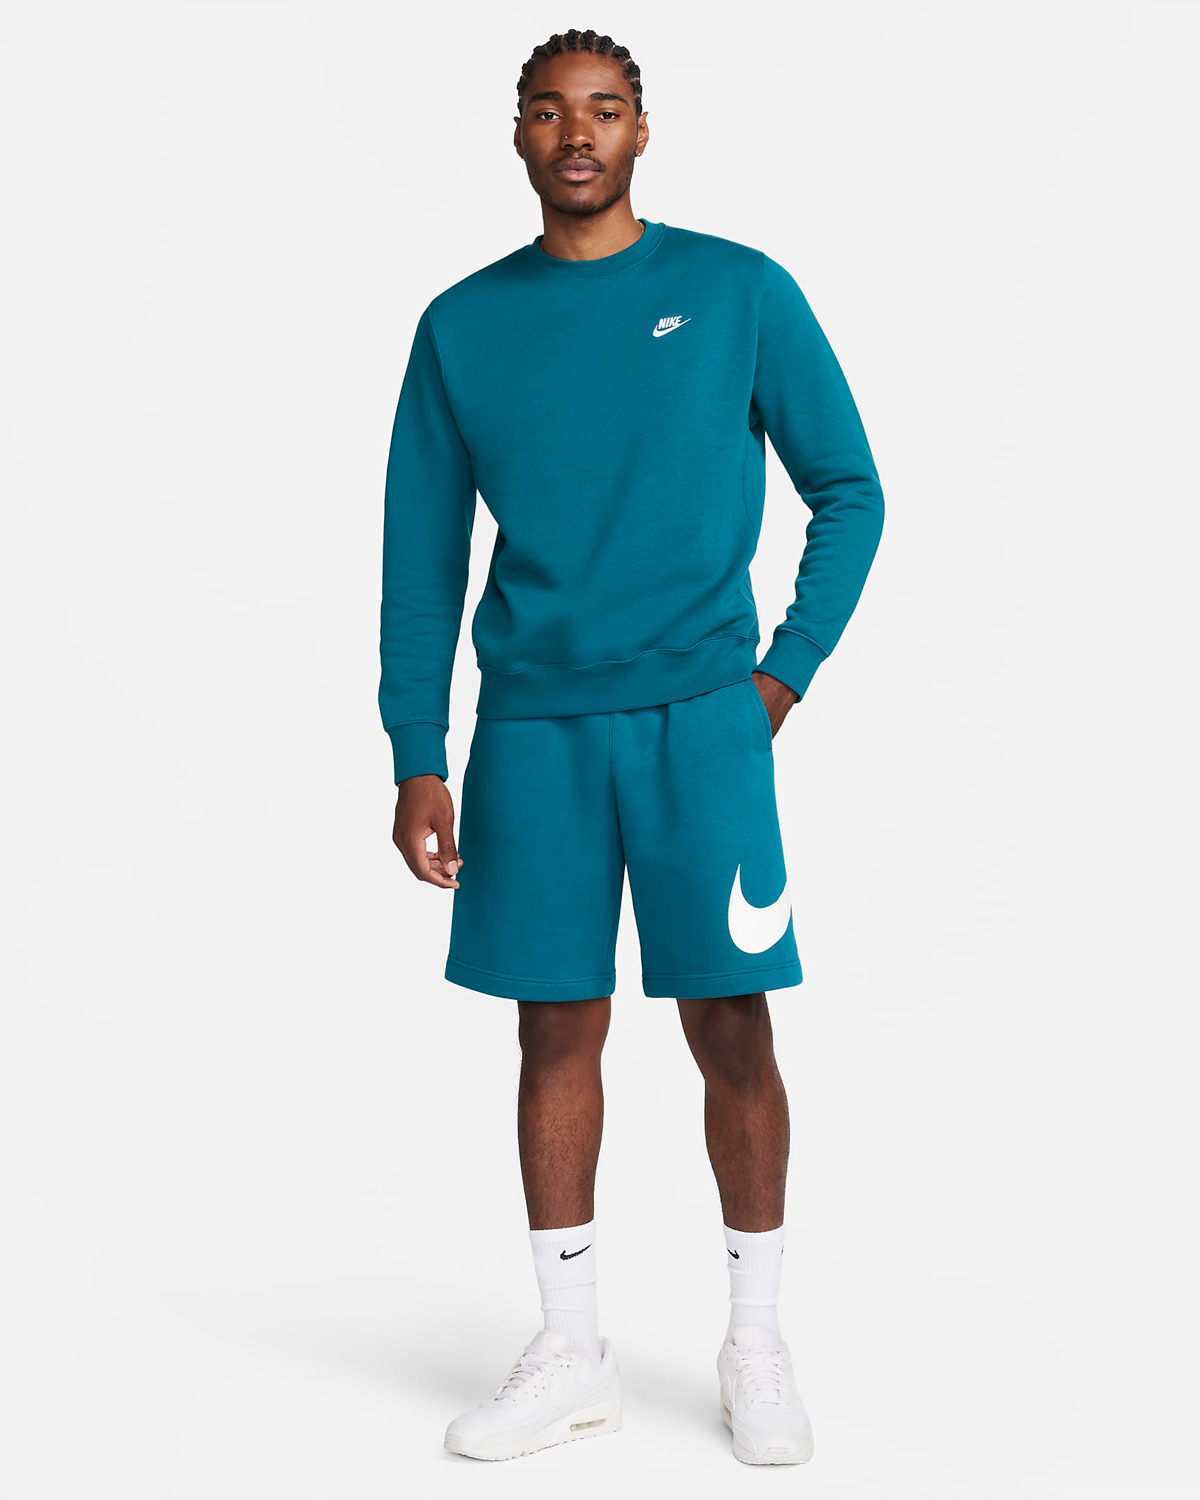 Nike-Club-Fleece-Crew-Sweatshirt-Geode-Teal-Outfit